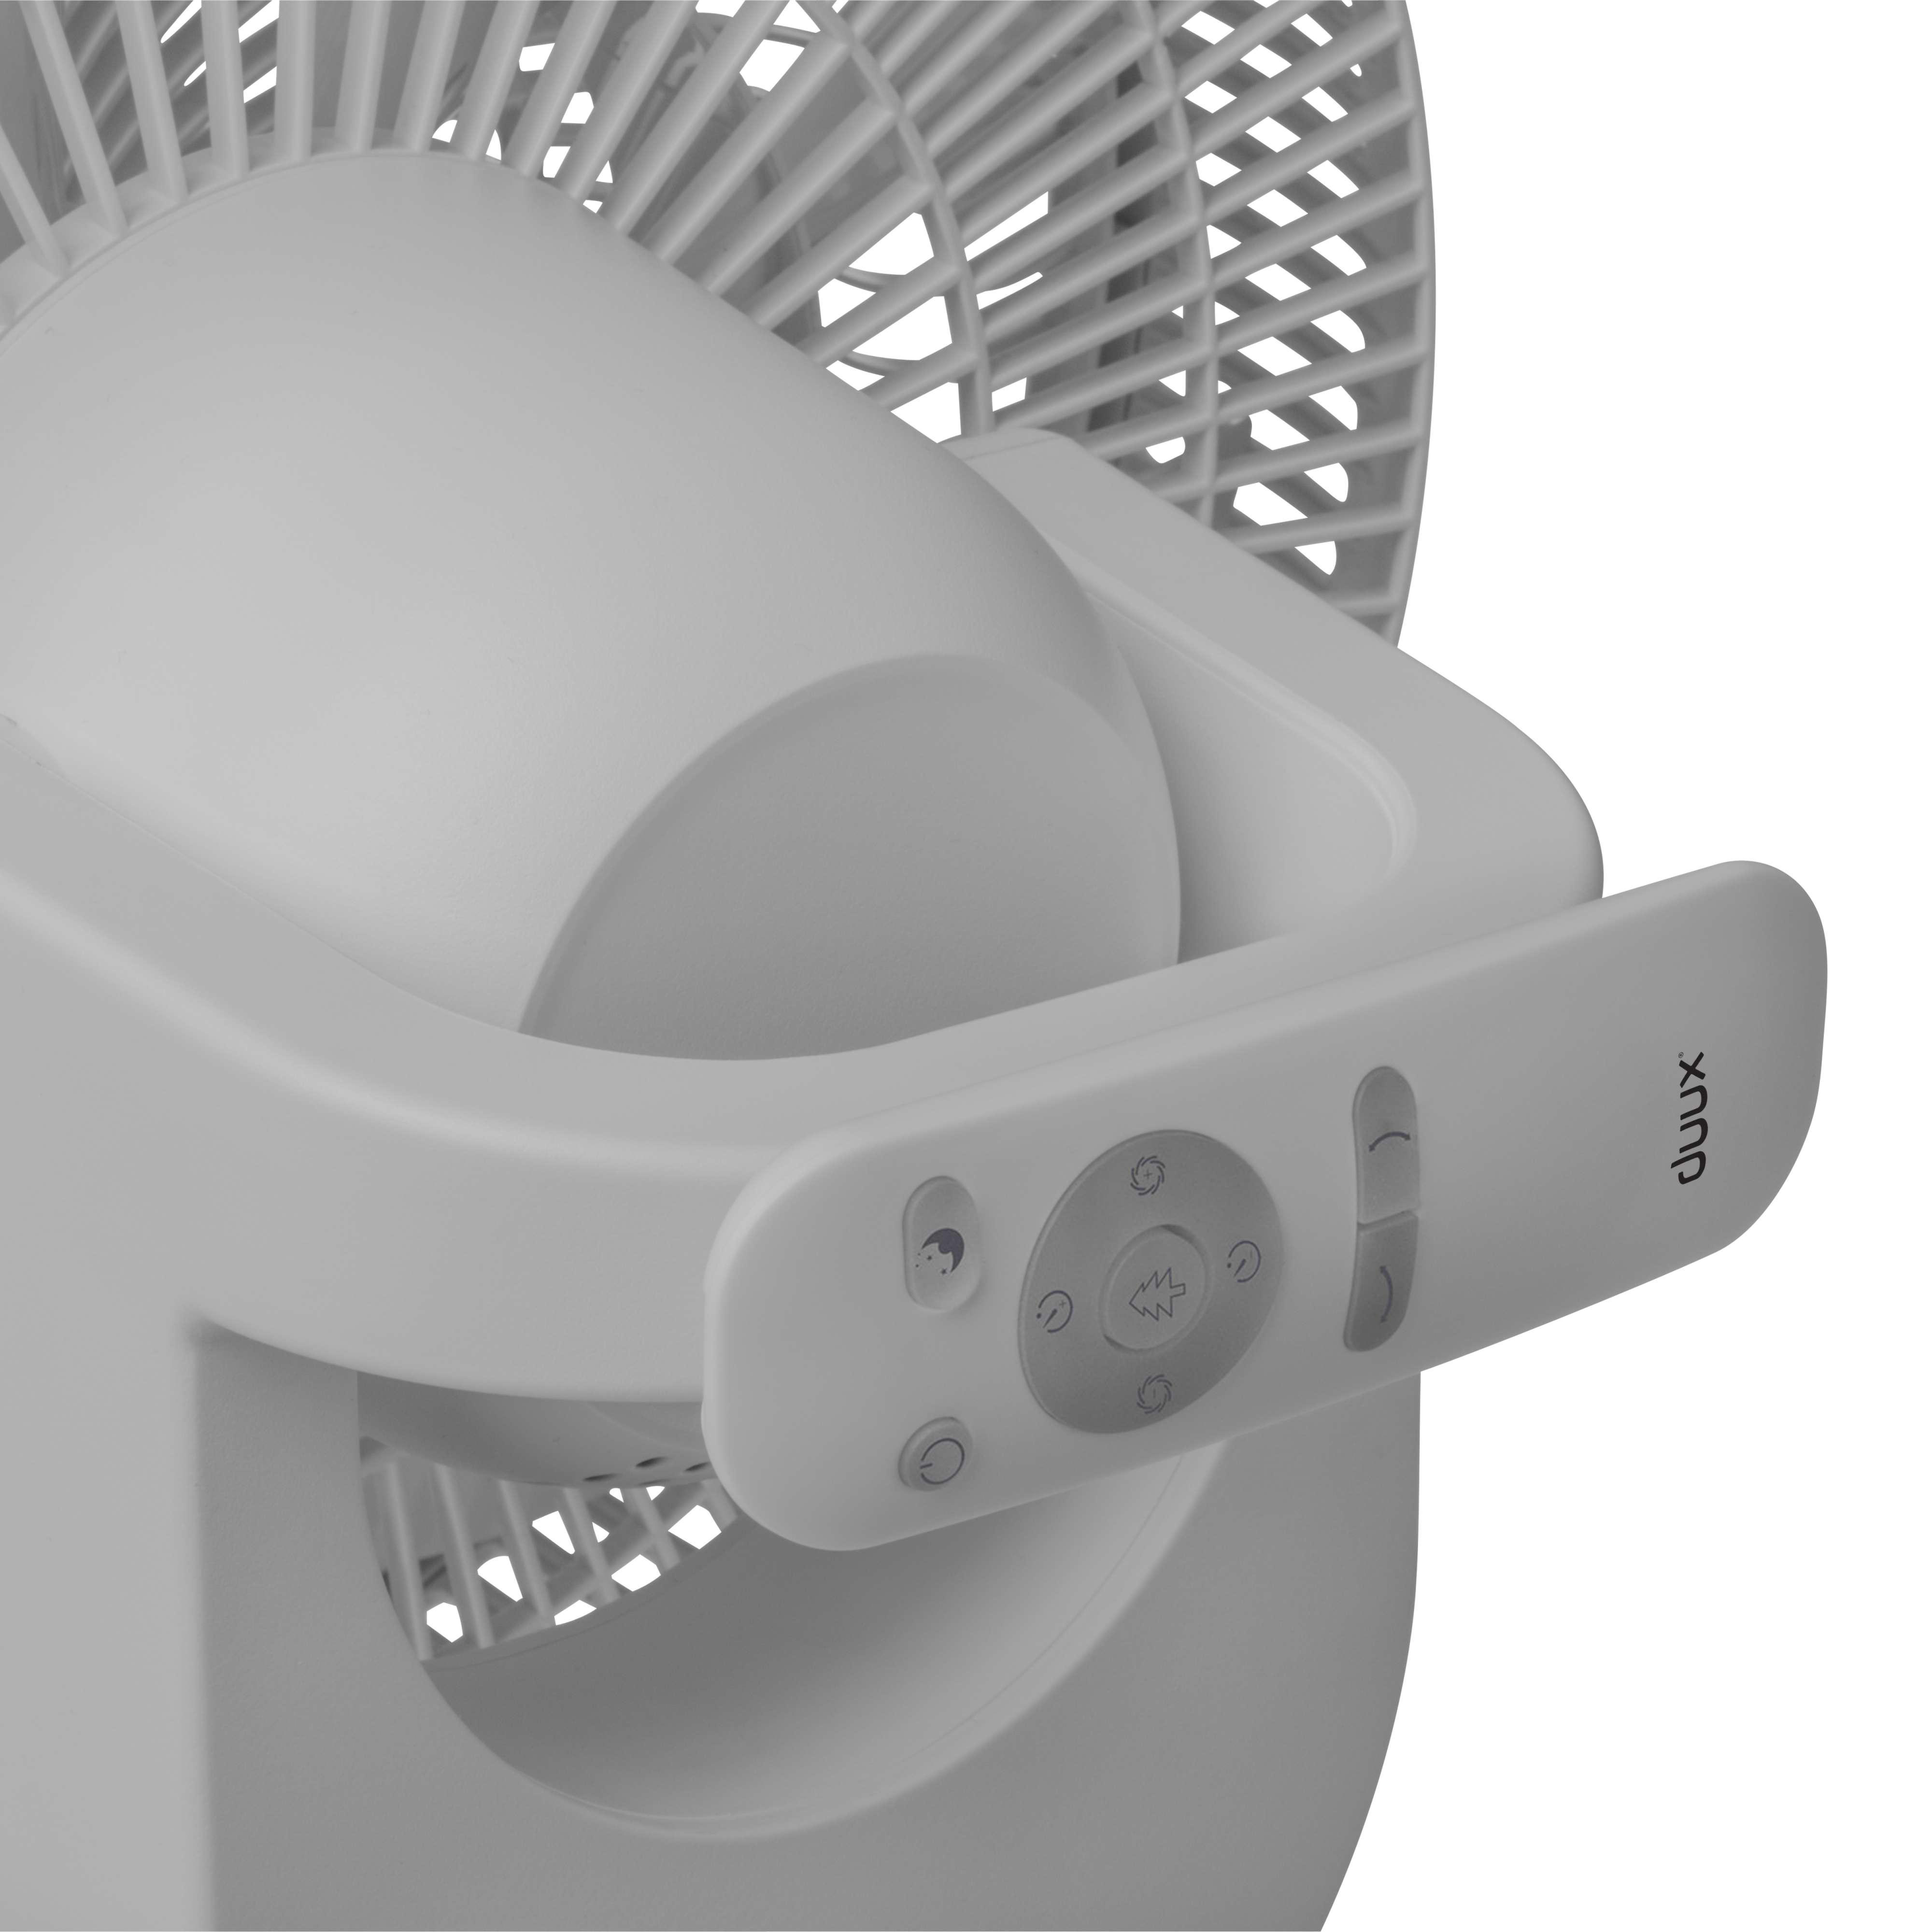 DUUX DXCF19 Whisper Flex Grau Standventilator Smart Fan Watt) (27